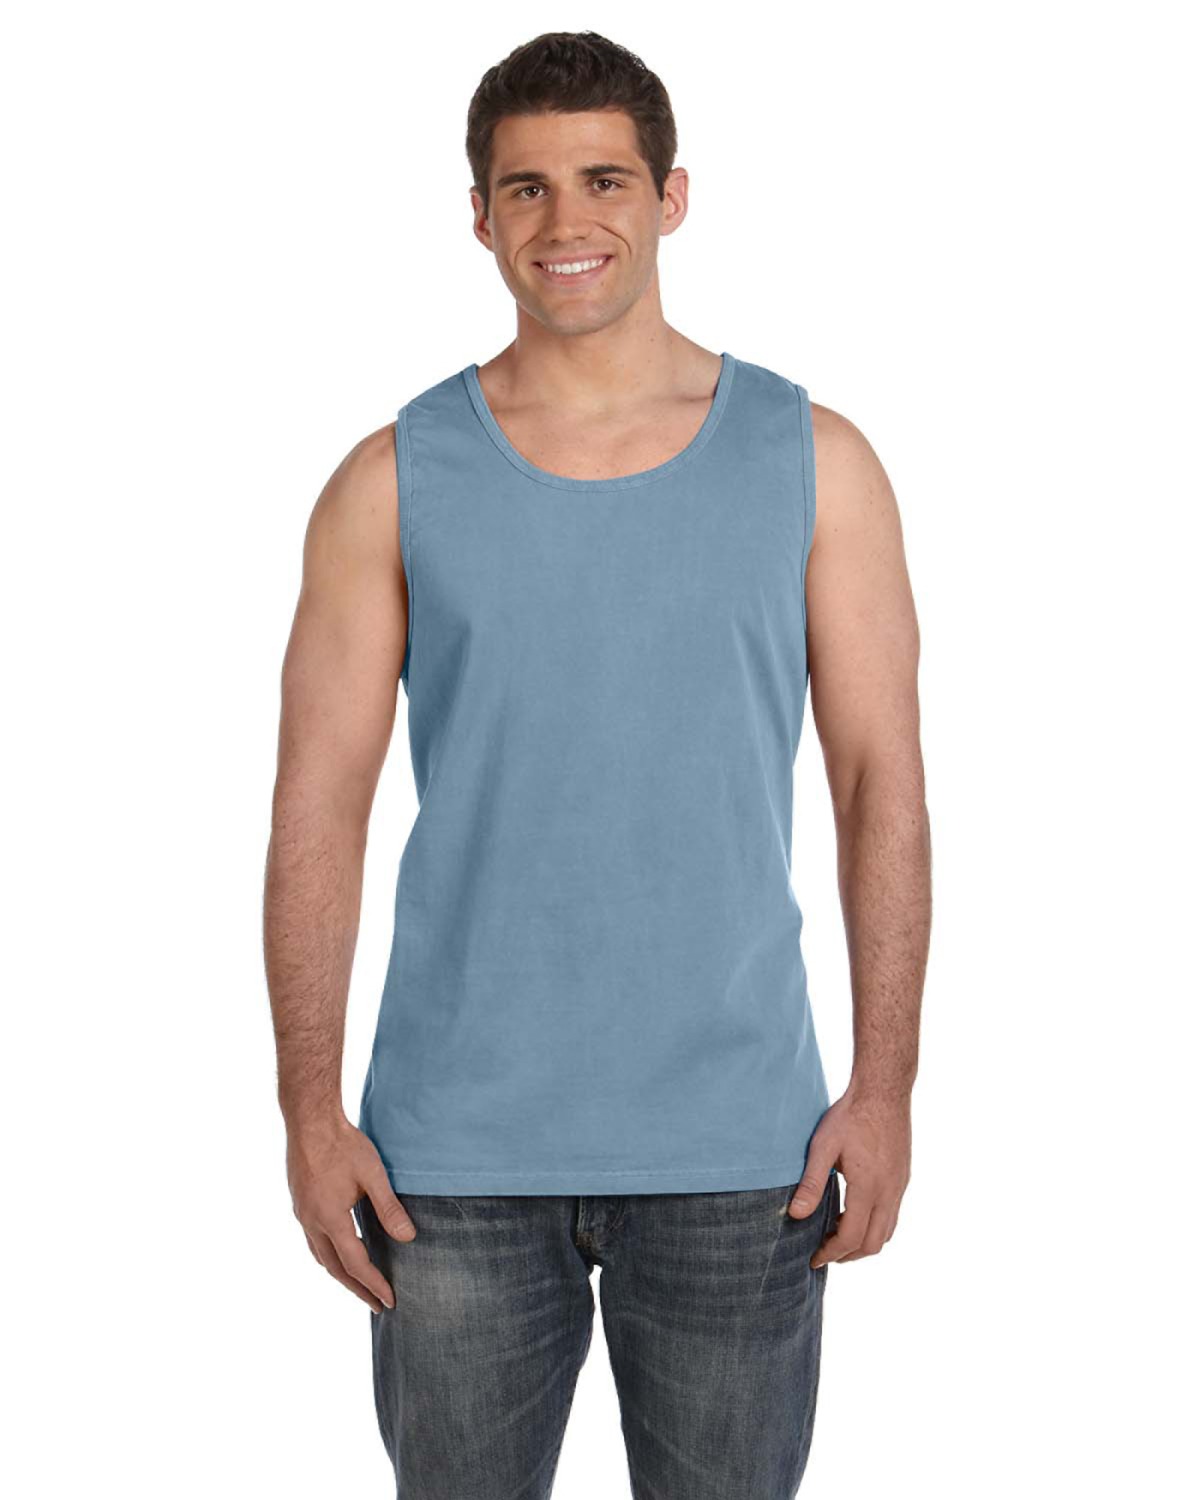 https://images.shirtspace.com/fullsize/ApaEQ98UzO3ckOt37G5w0w%3D%3D/138089/1023-comfort-colors-c9360-heavyweight-ring-spun-tank-top-front-ice-blue.jpg